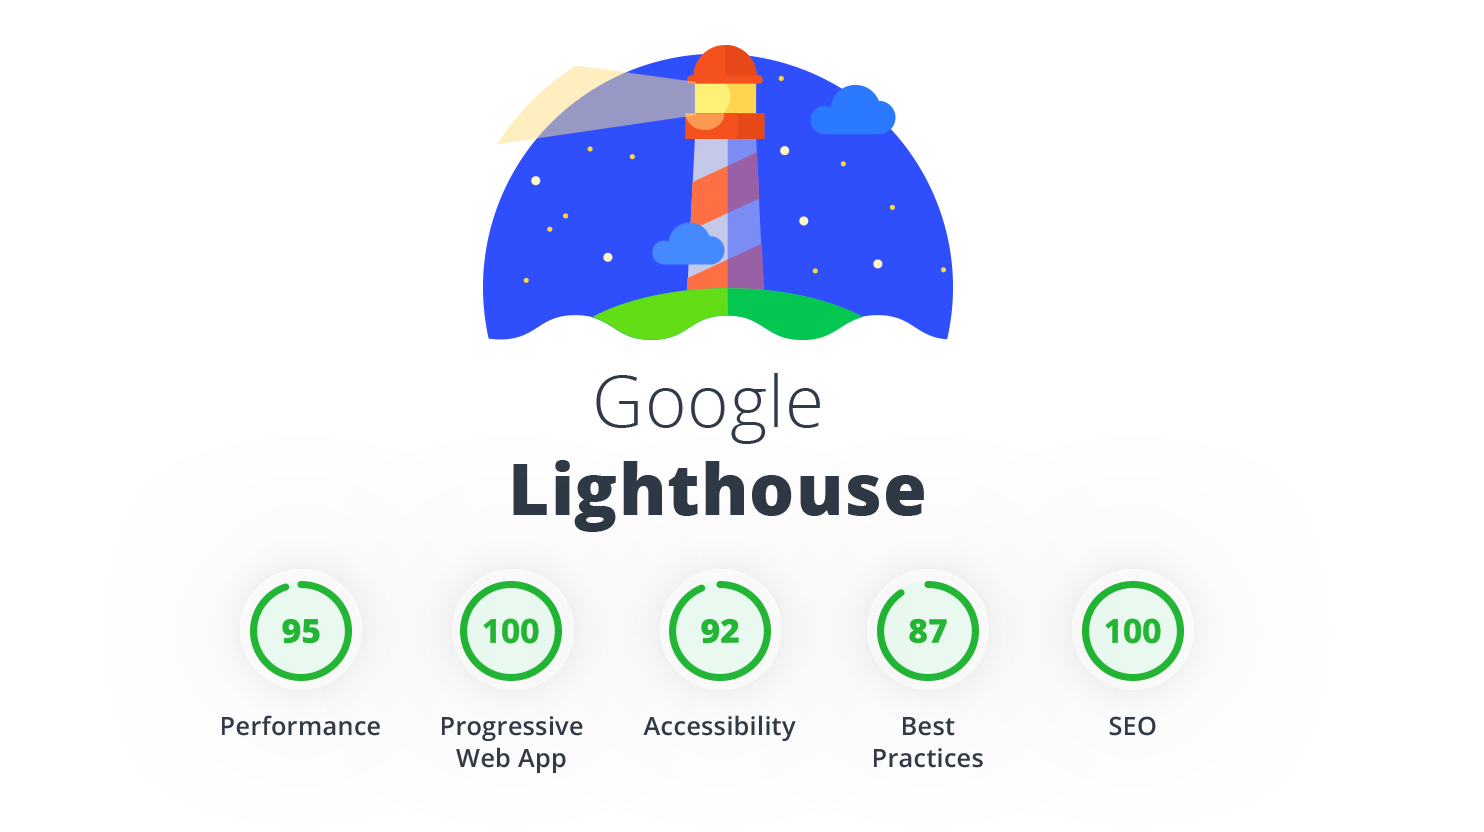 Uses of Google Lighthouse